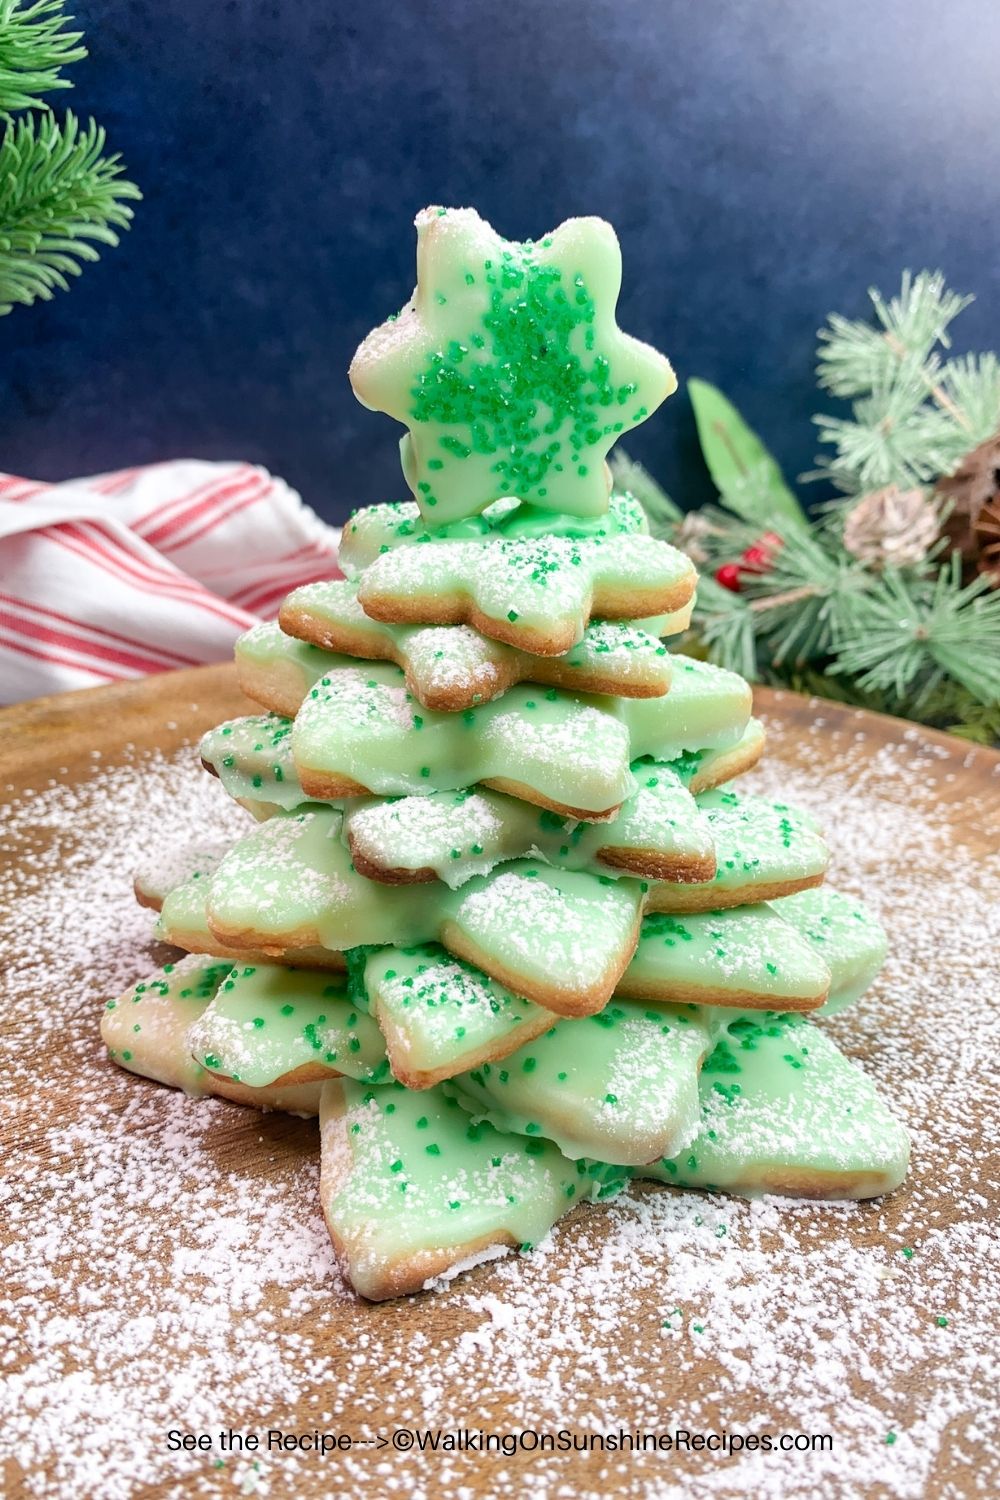 https://walkingonsunshinerecipes.com/wp-content/uploads/2021/12/Italian-Christmas-Cookies-Pin3.jpg